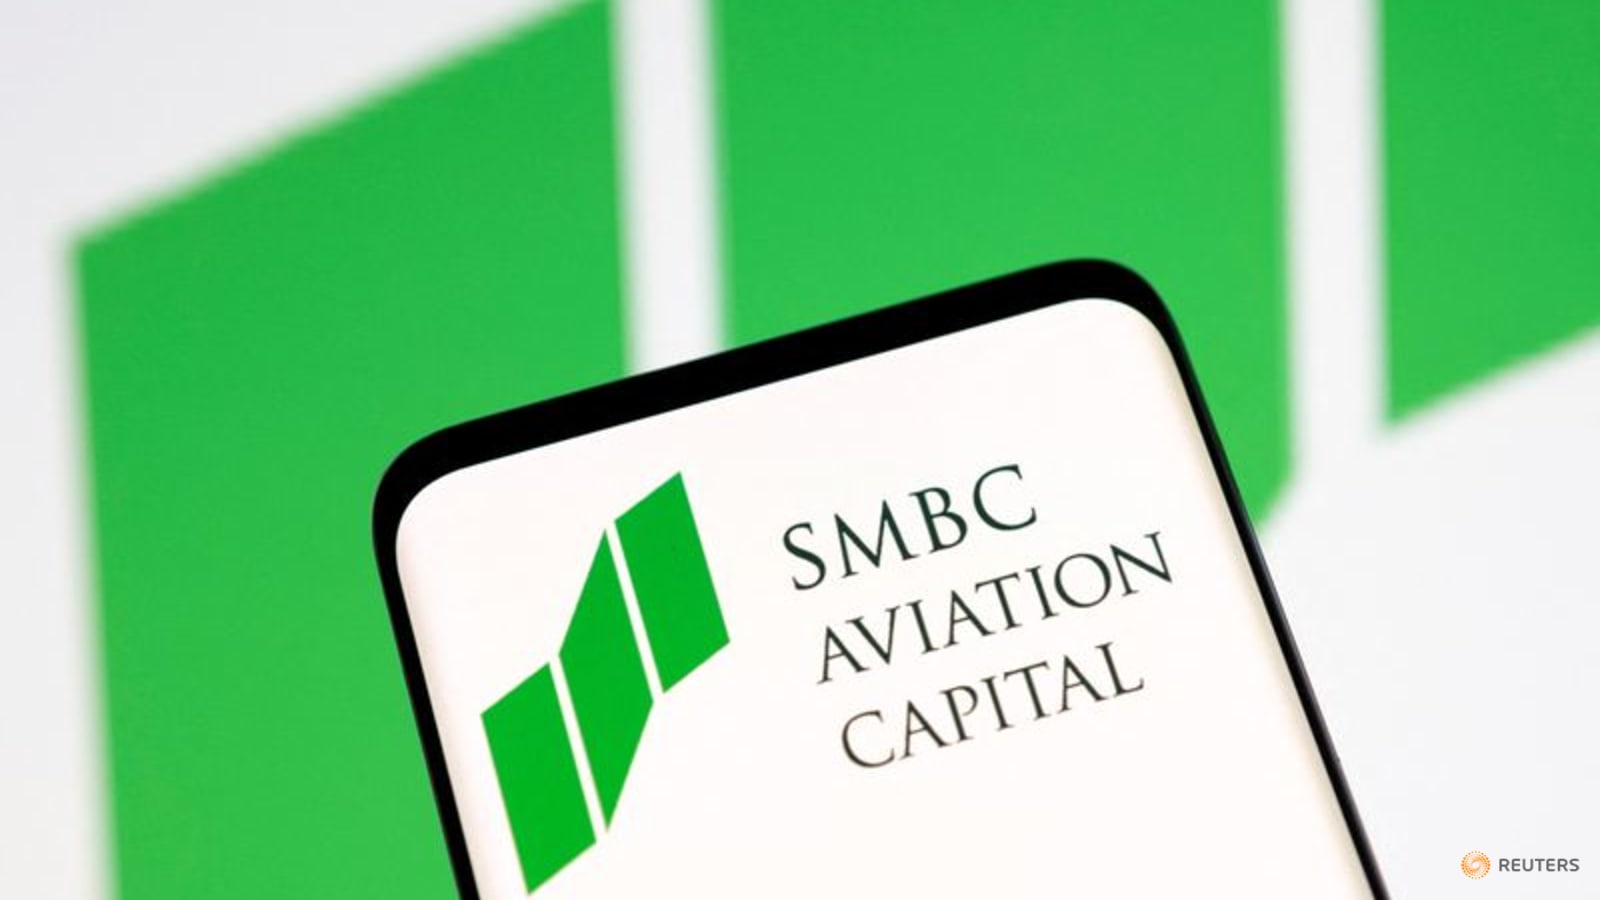 Aircraft lessor SMBC to buy rival Goshawk in $6.7 billion deal